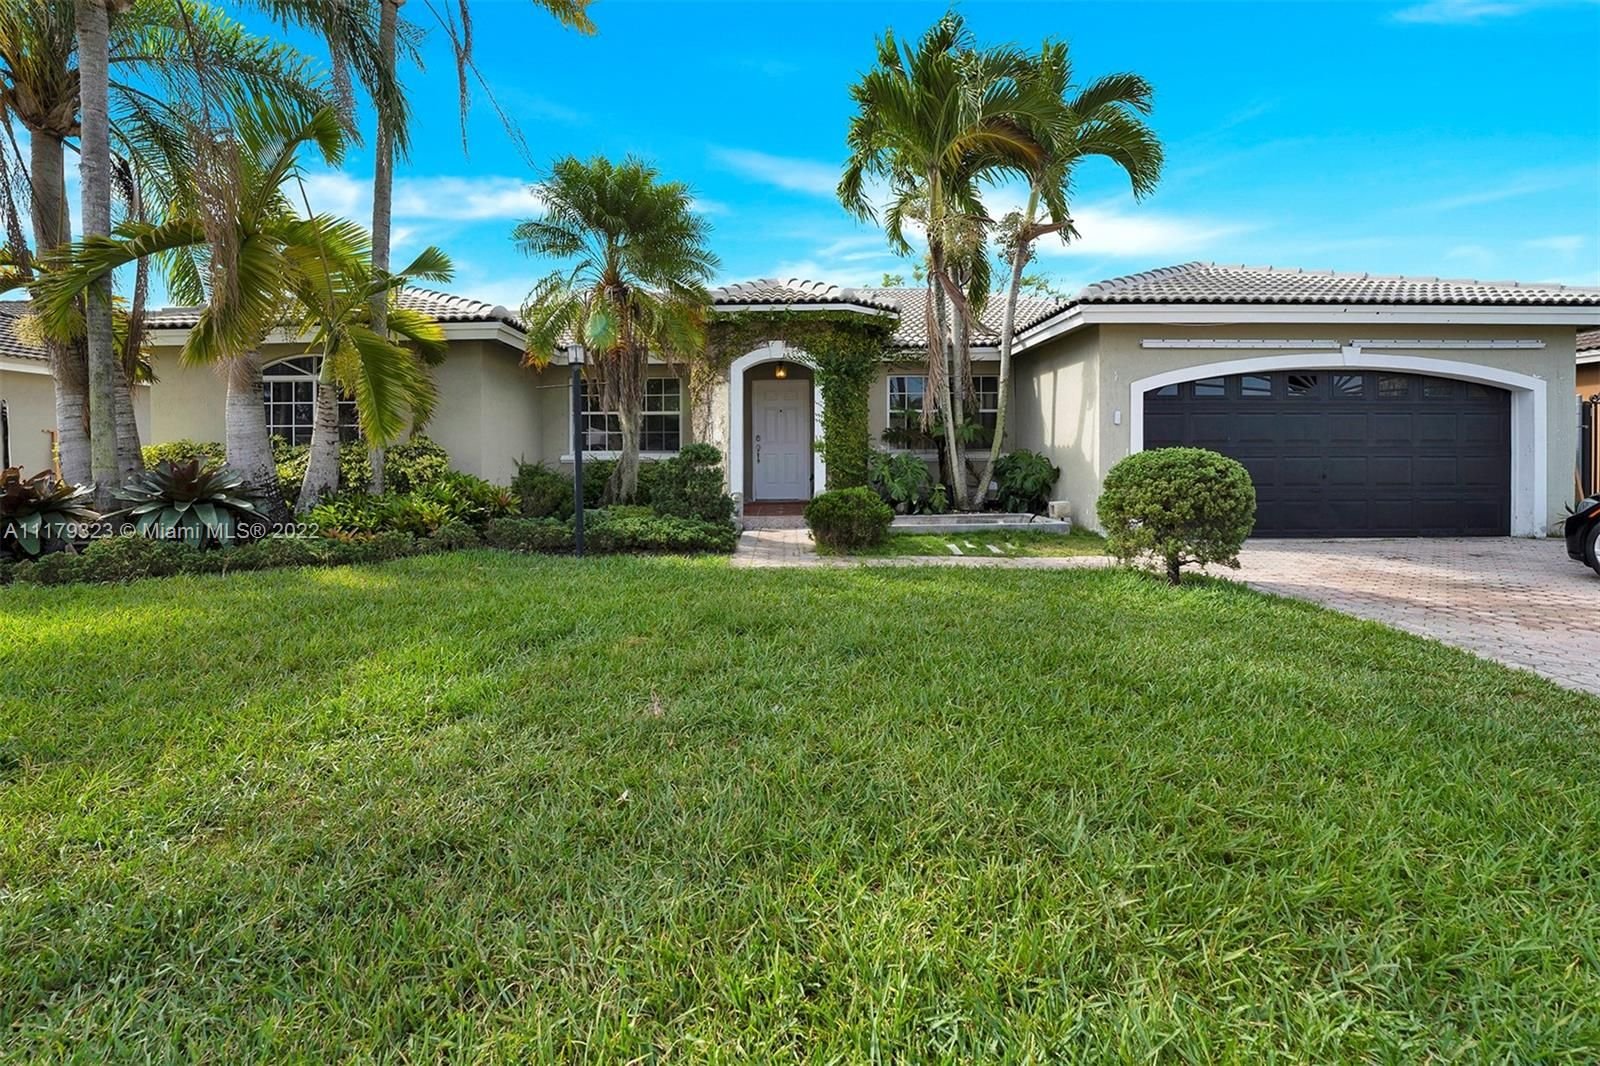 Real estate property located at 15290 170th Ter, Miami-Dade County, Miami, FL